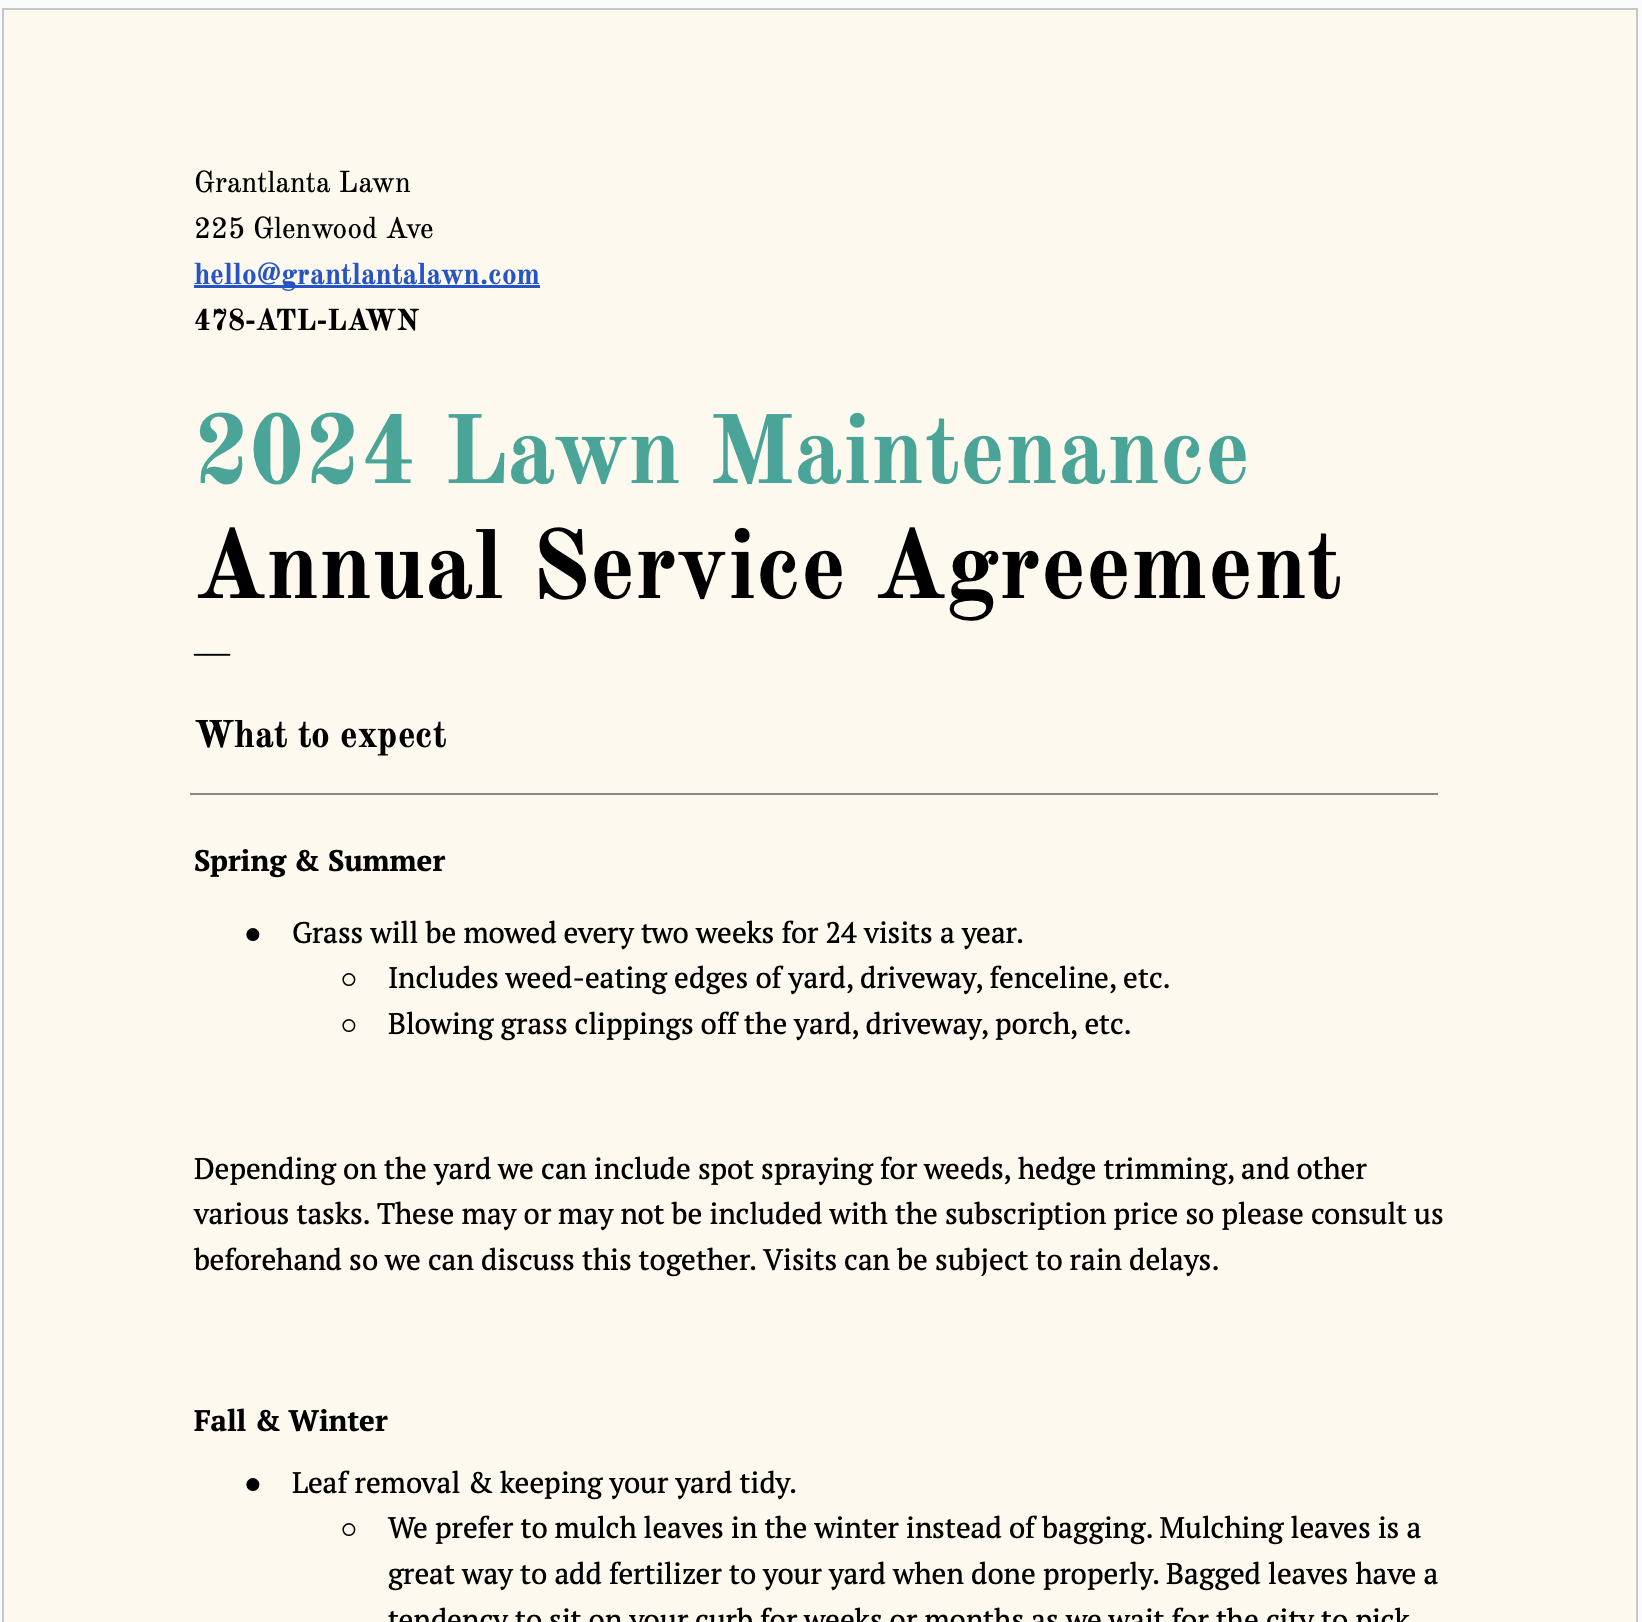 Lawn Maintenance Annual Service Agreement thumbnail